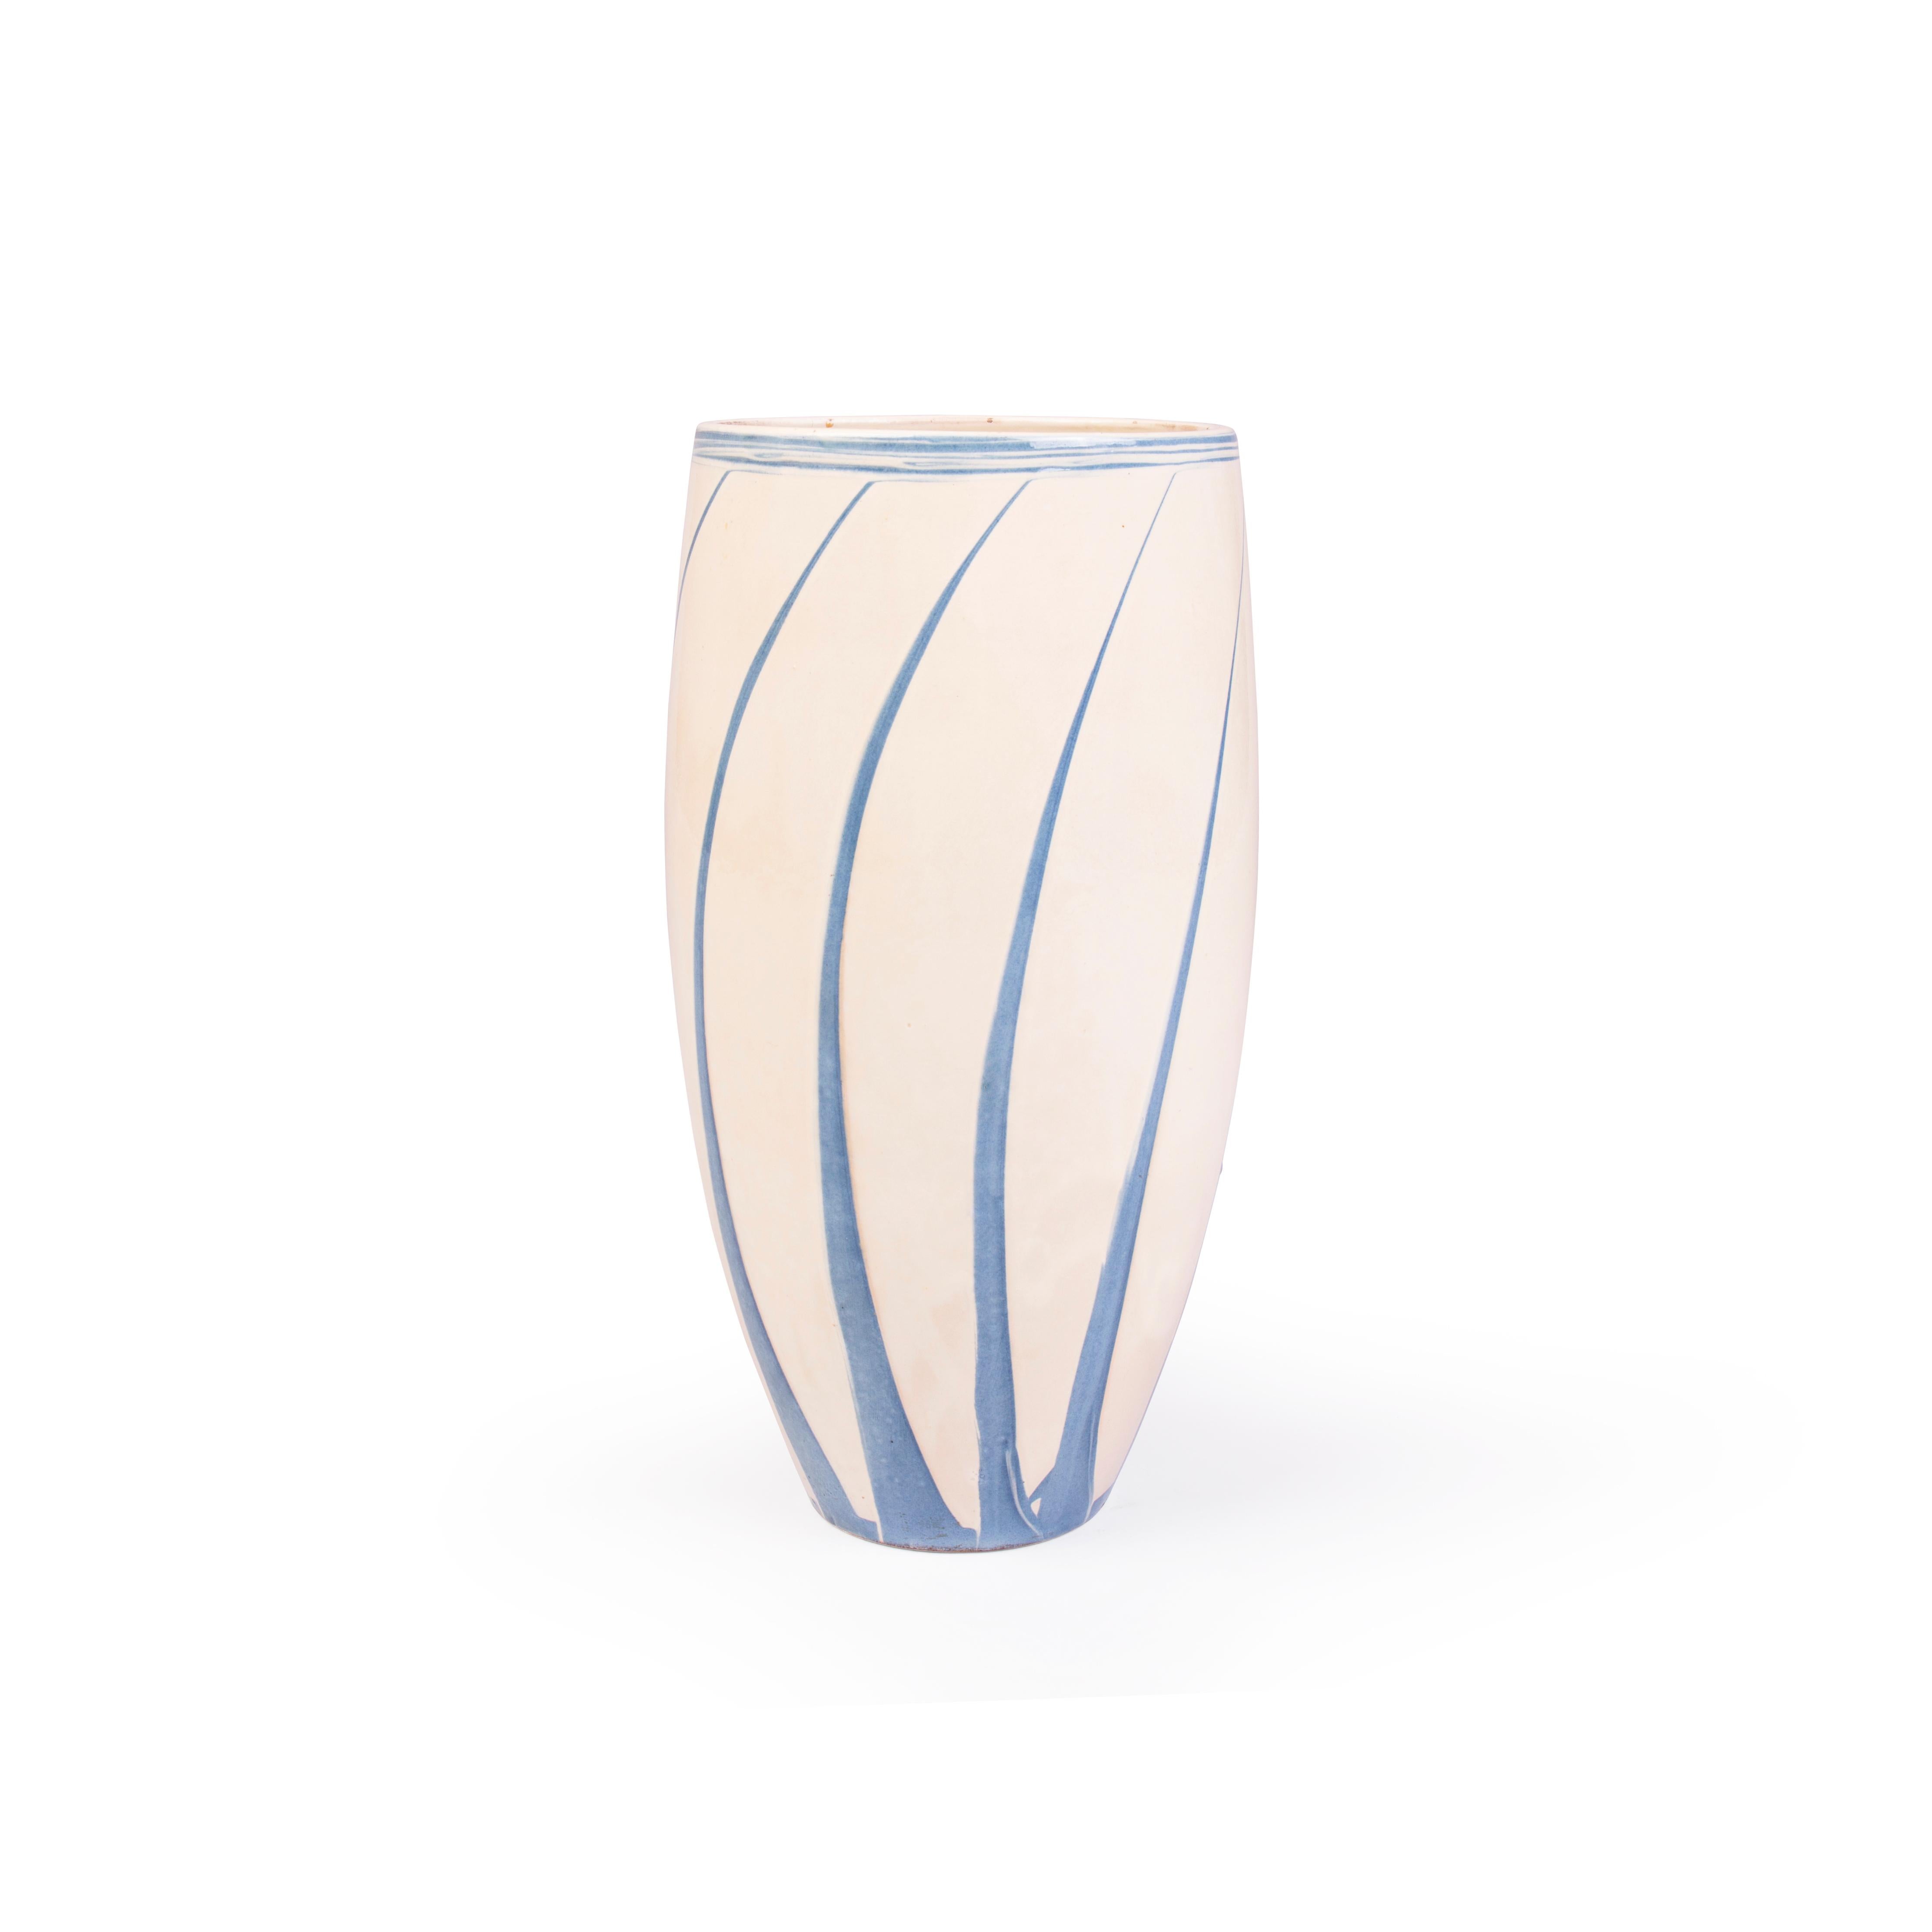 Glazed Large Danish vase with light blue stripes on a cream colored base  For Sale